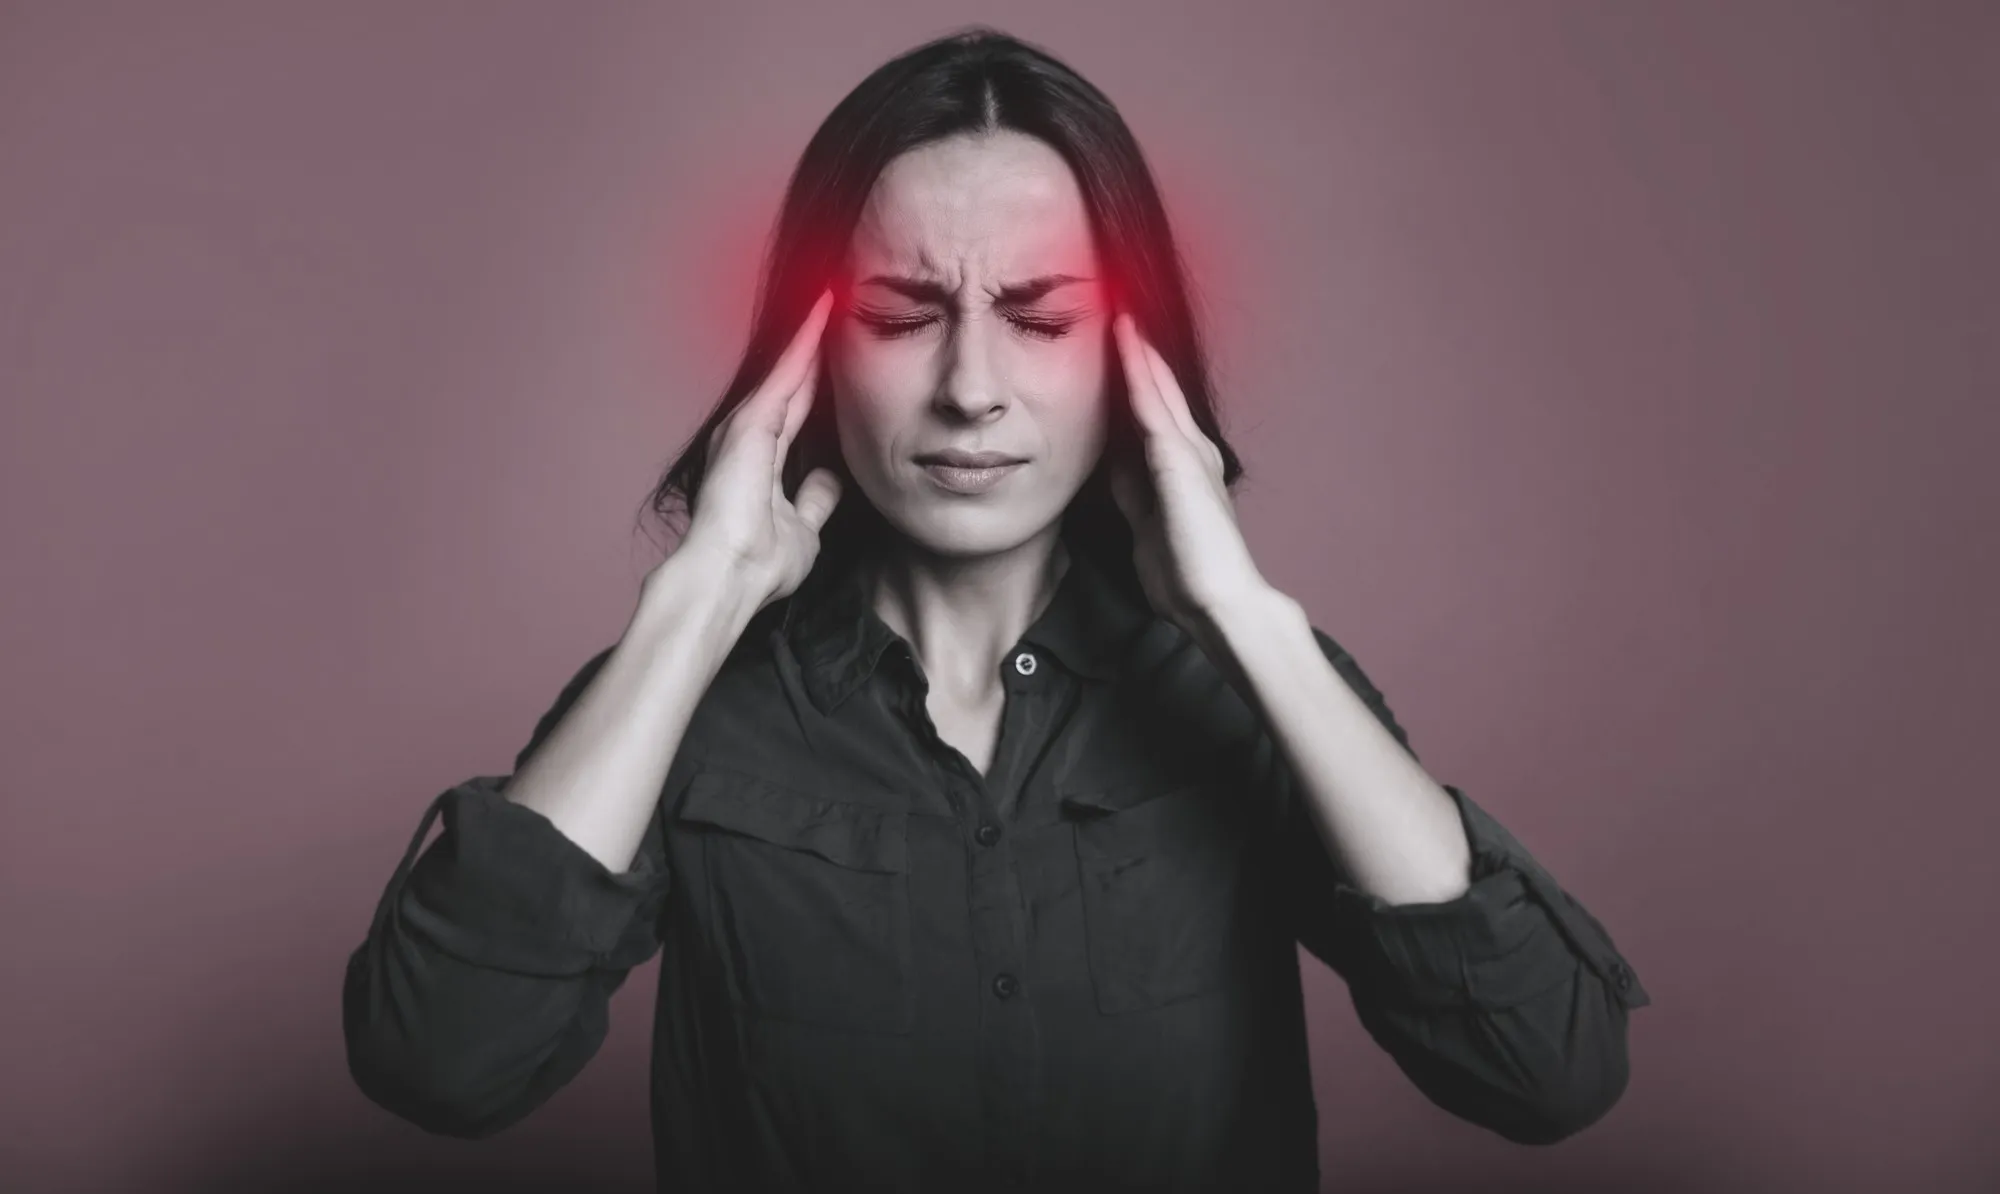 Headaches & migraines